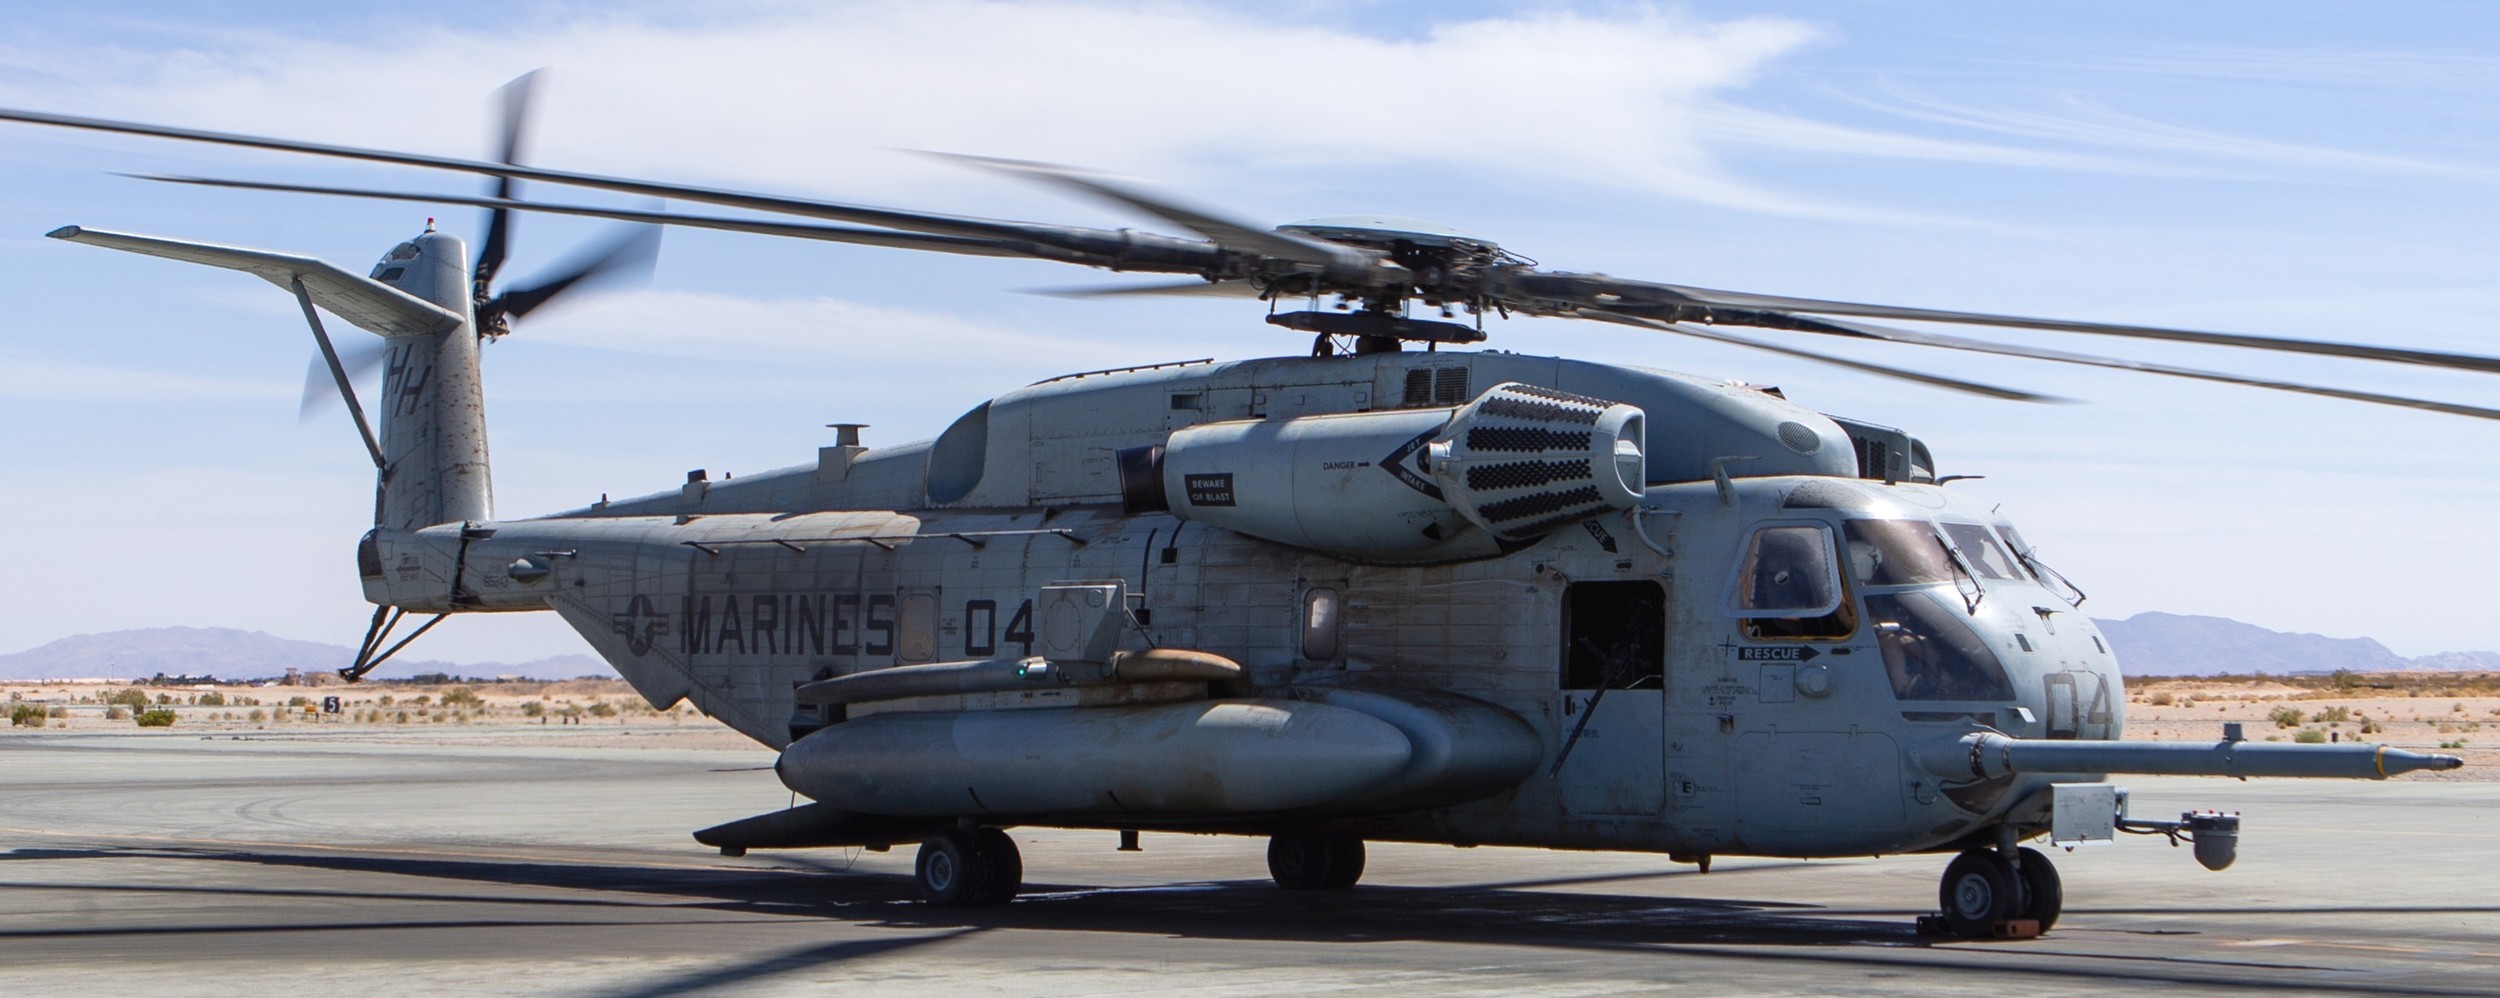 hmh-366 hammerheads marine heavy helicopter squadron usmc sikorsky ch-53e super stallion 121 mcagcc twentynine palms california